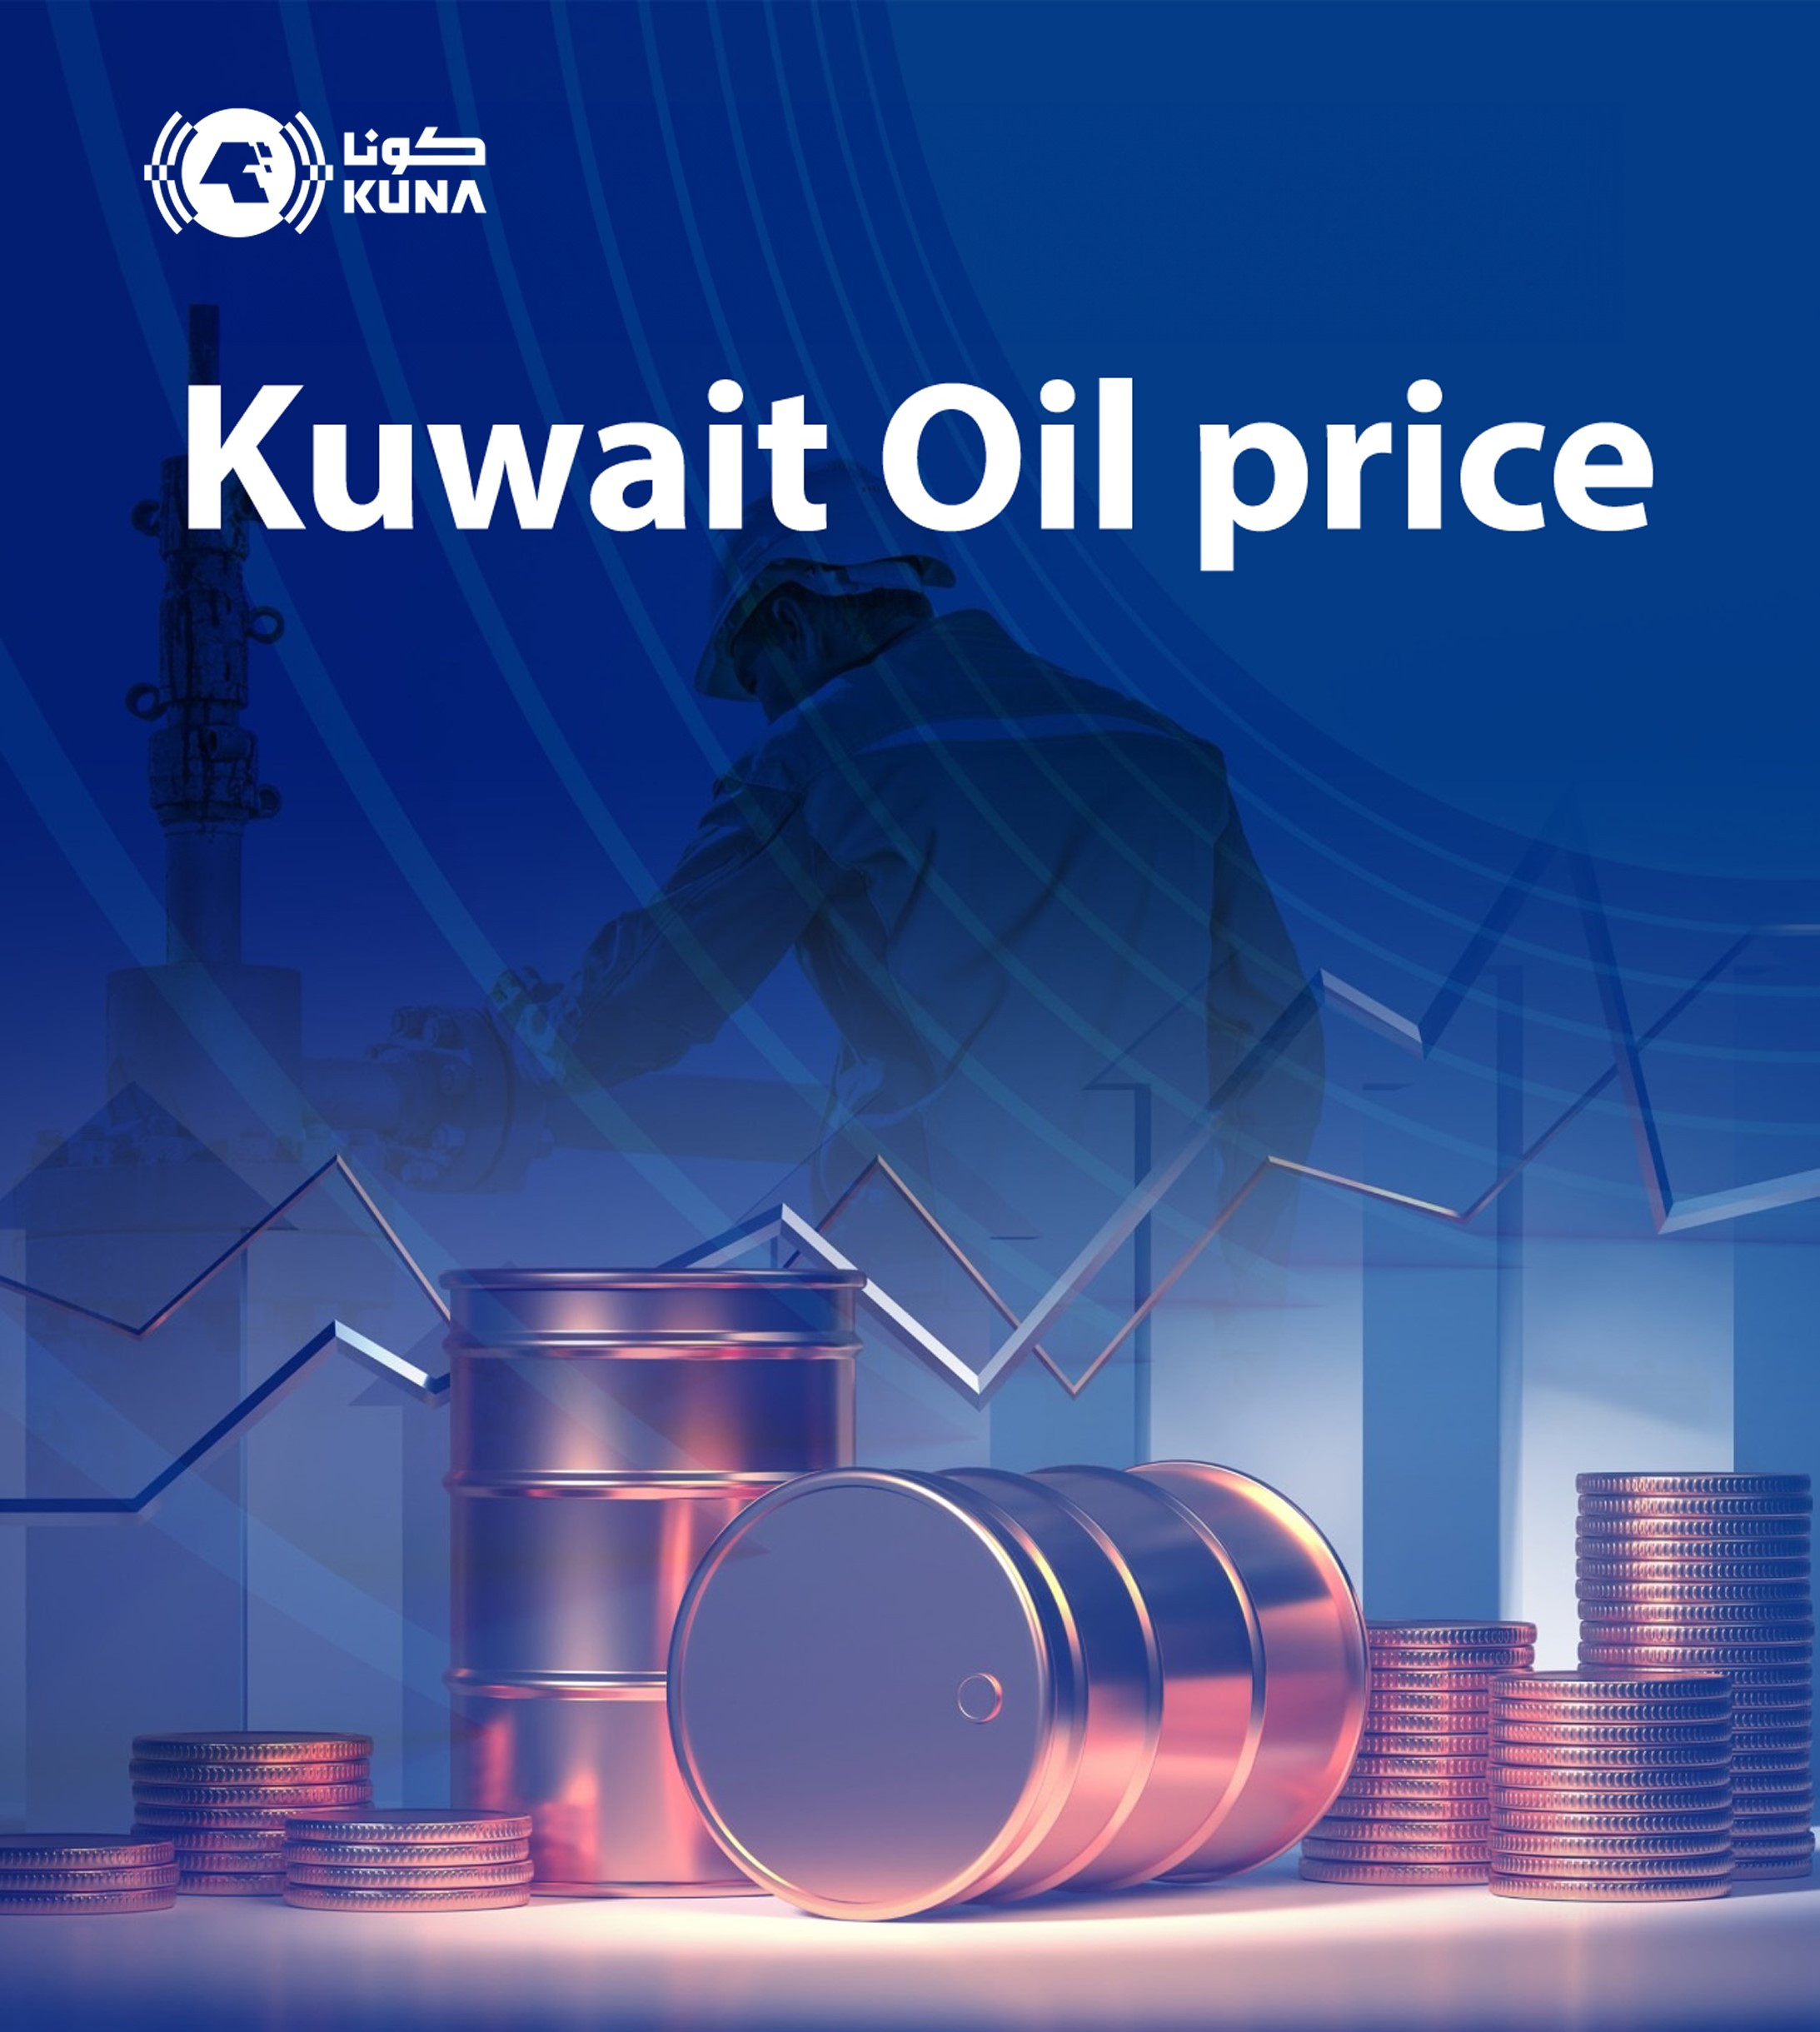 Kuwait oil price rises to USD 85.08 pb